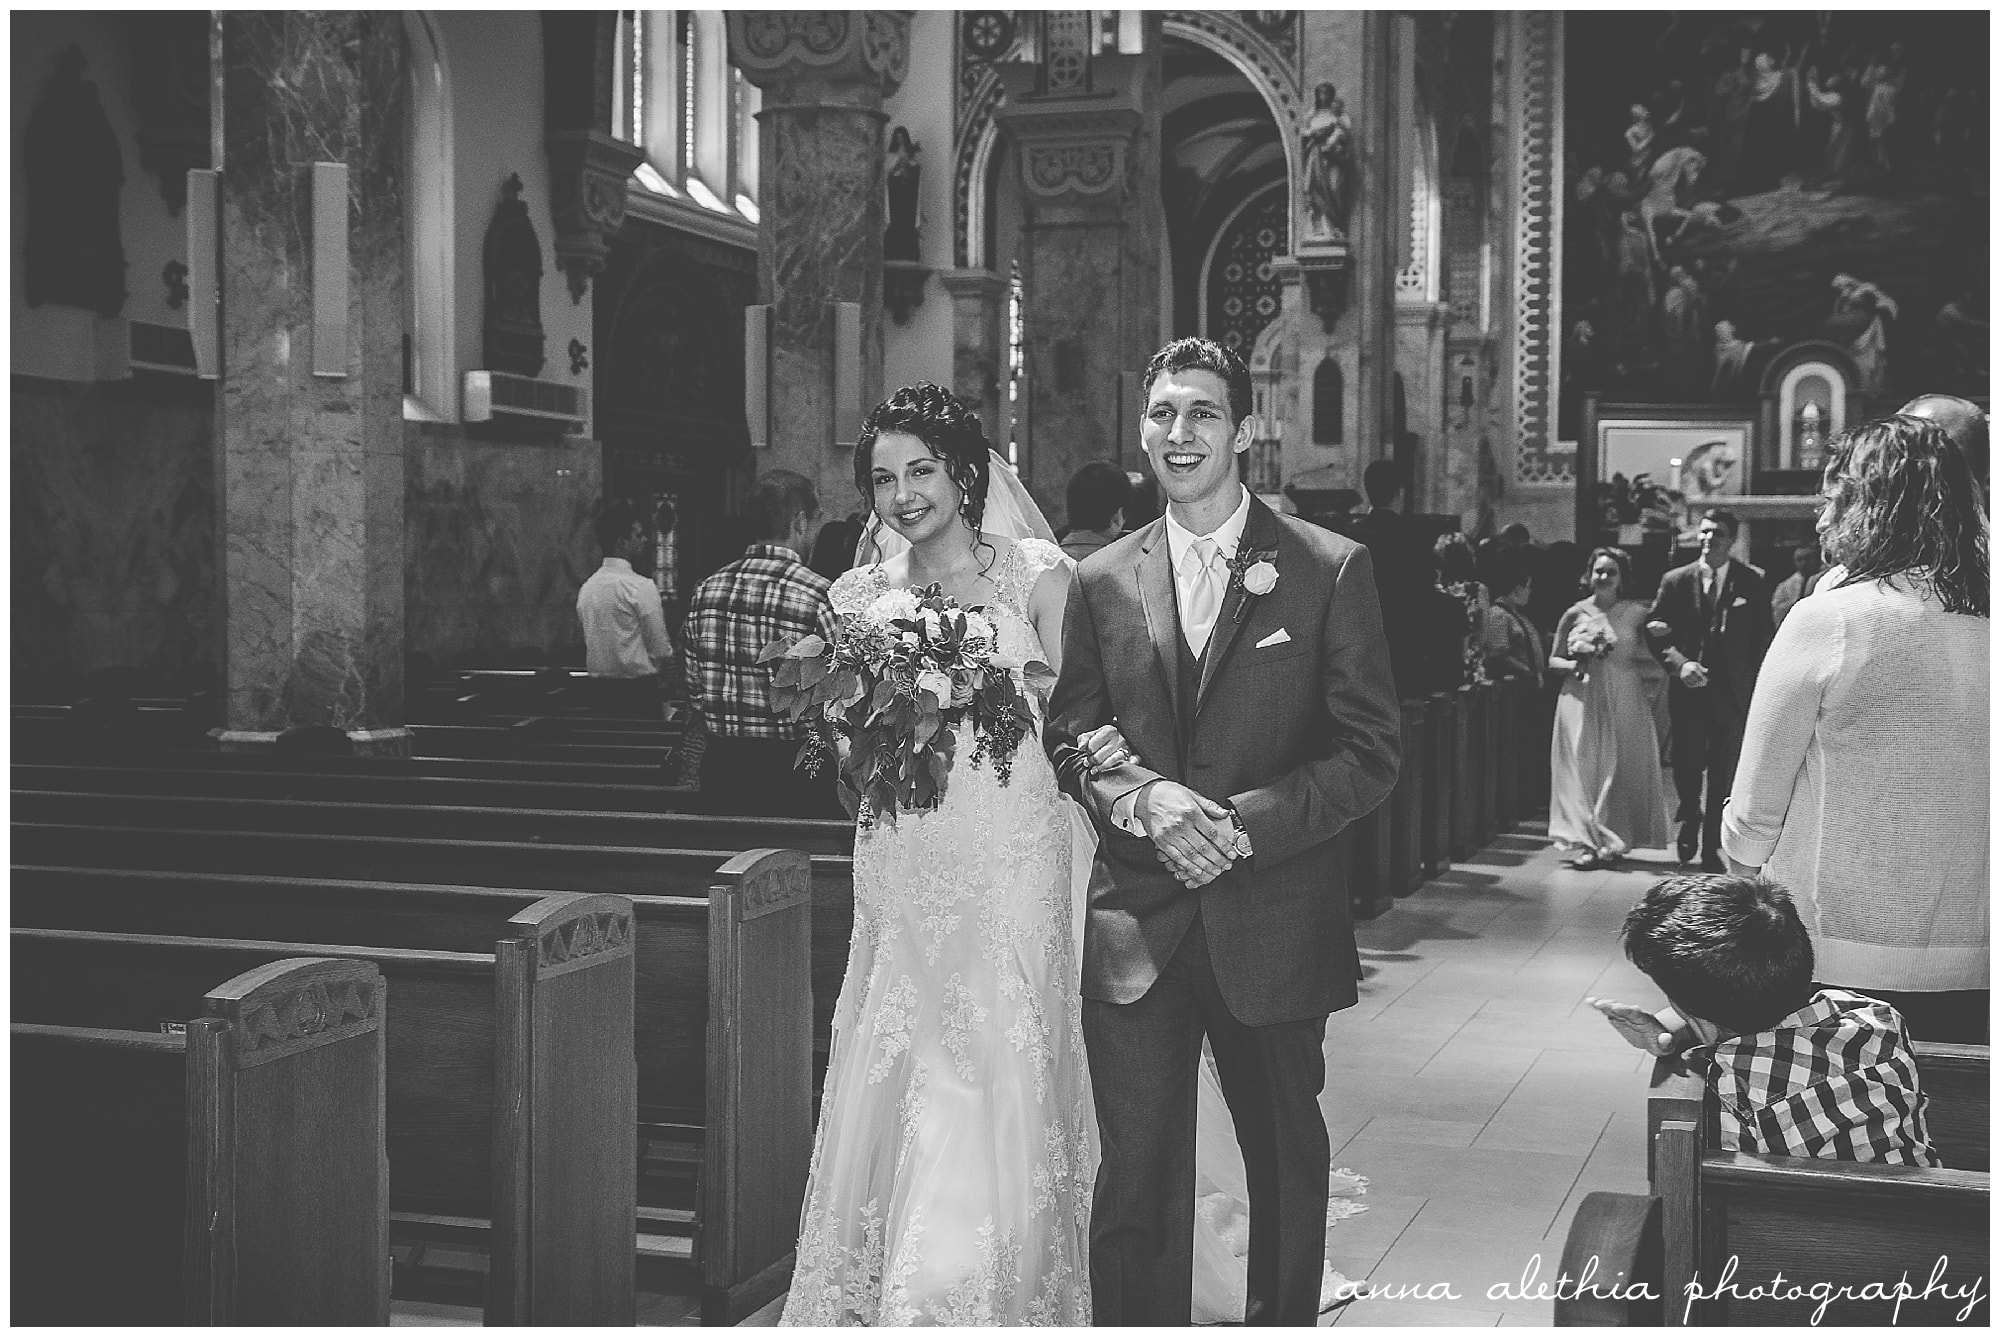 St Francis Green Bay WI Wedding photos